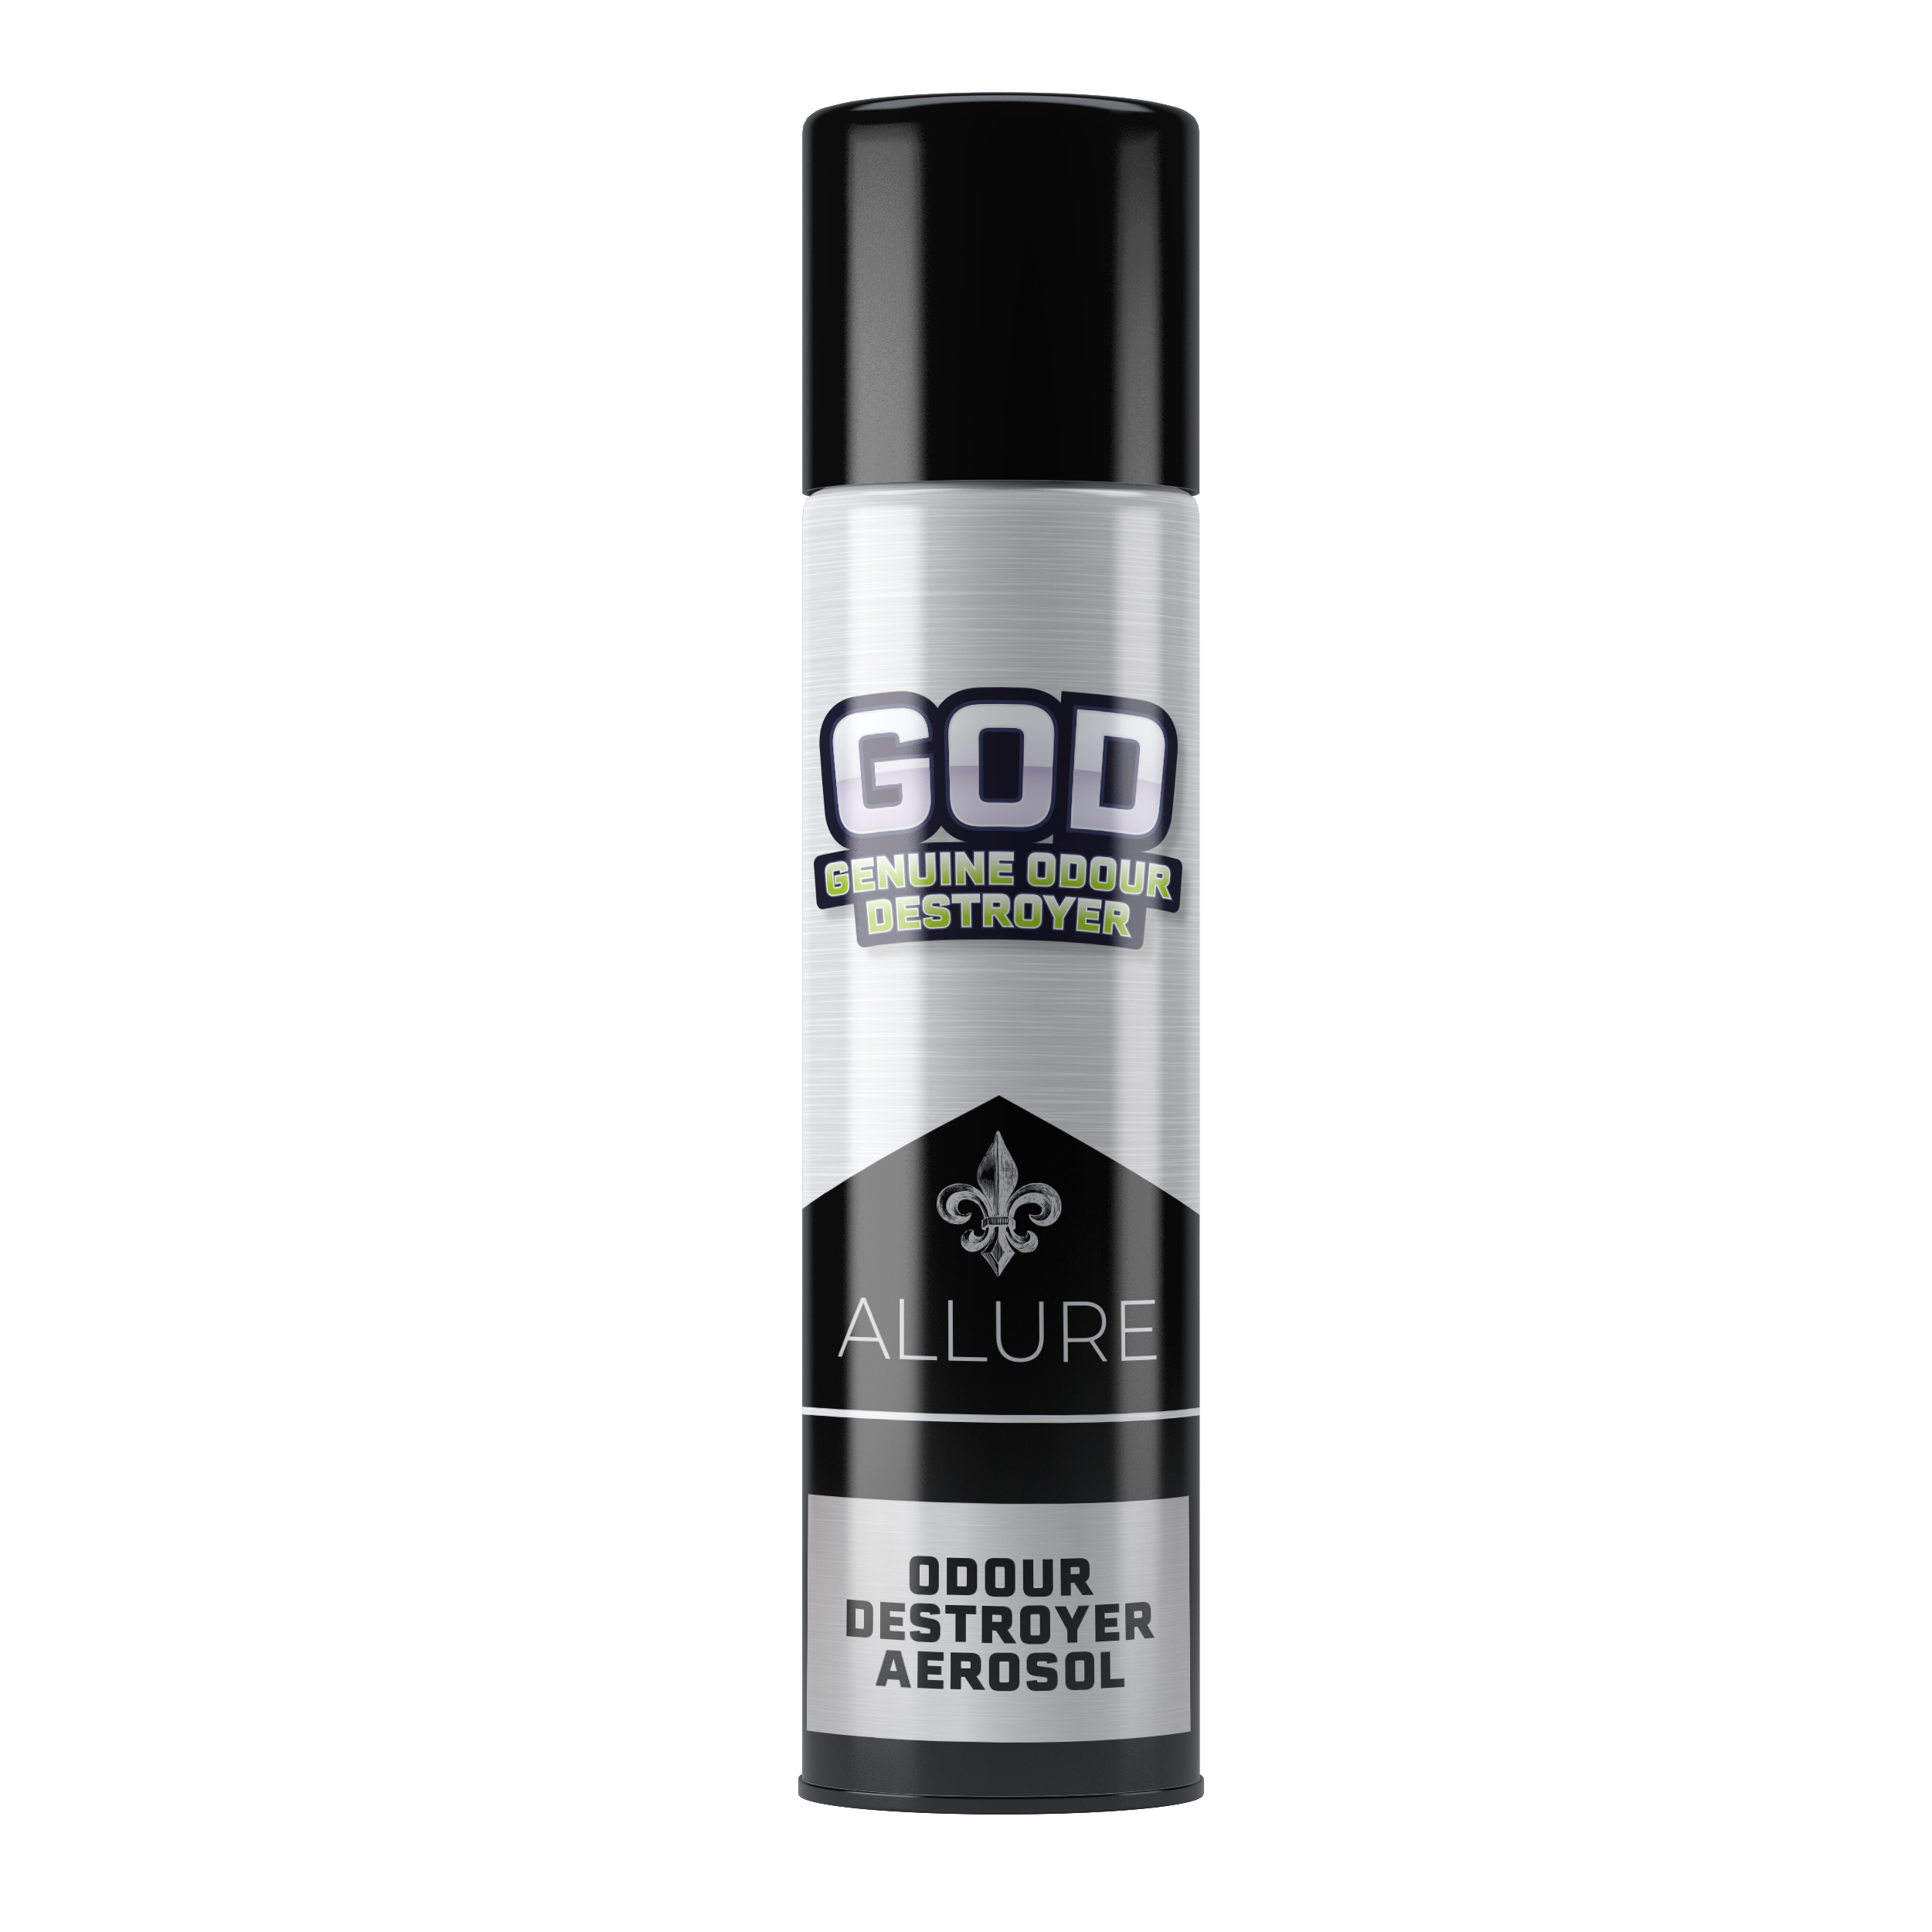 Odour Control Genuine Odour Destroyer Spray 750ml